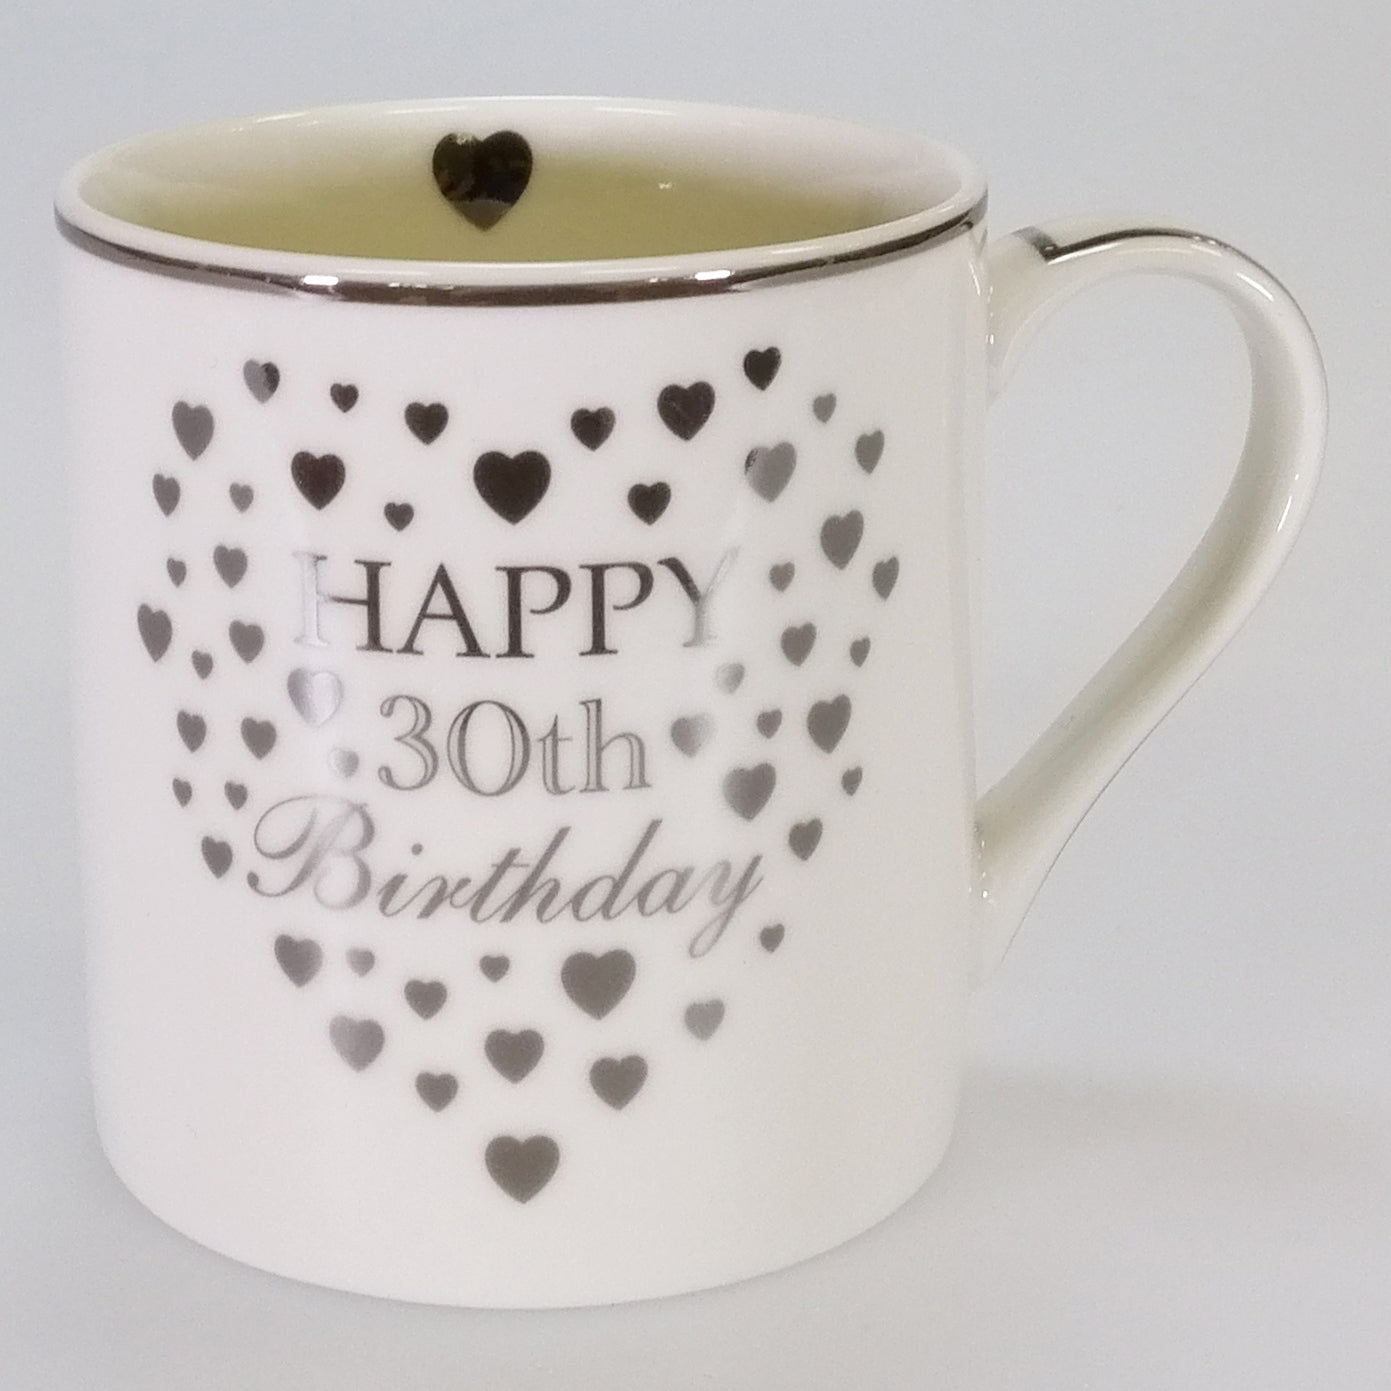 Happy 30th birthdays' Mug